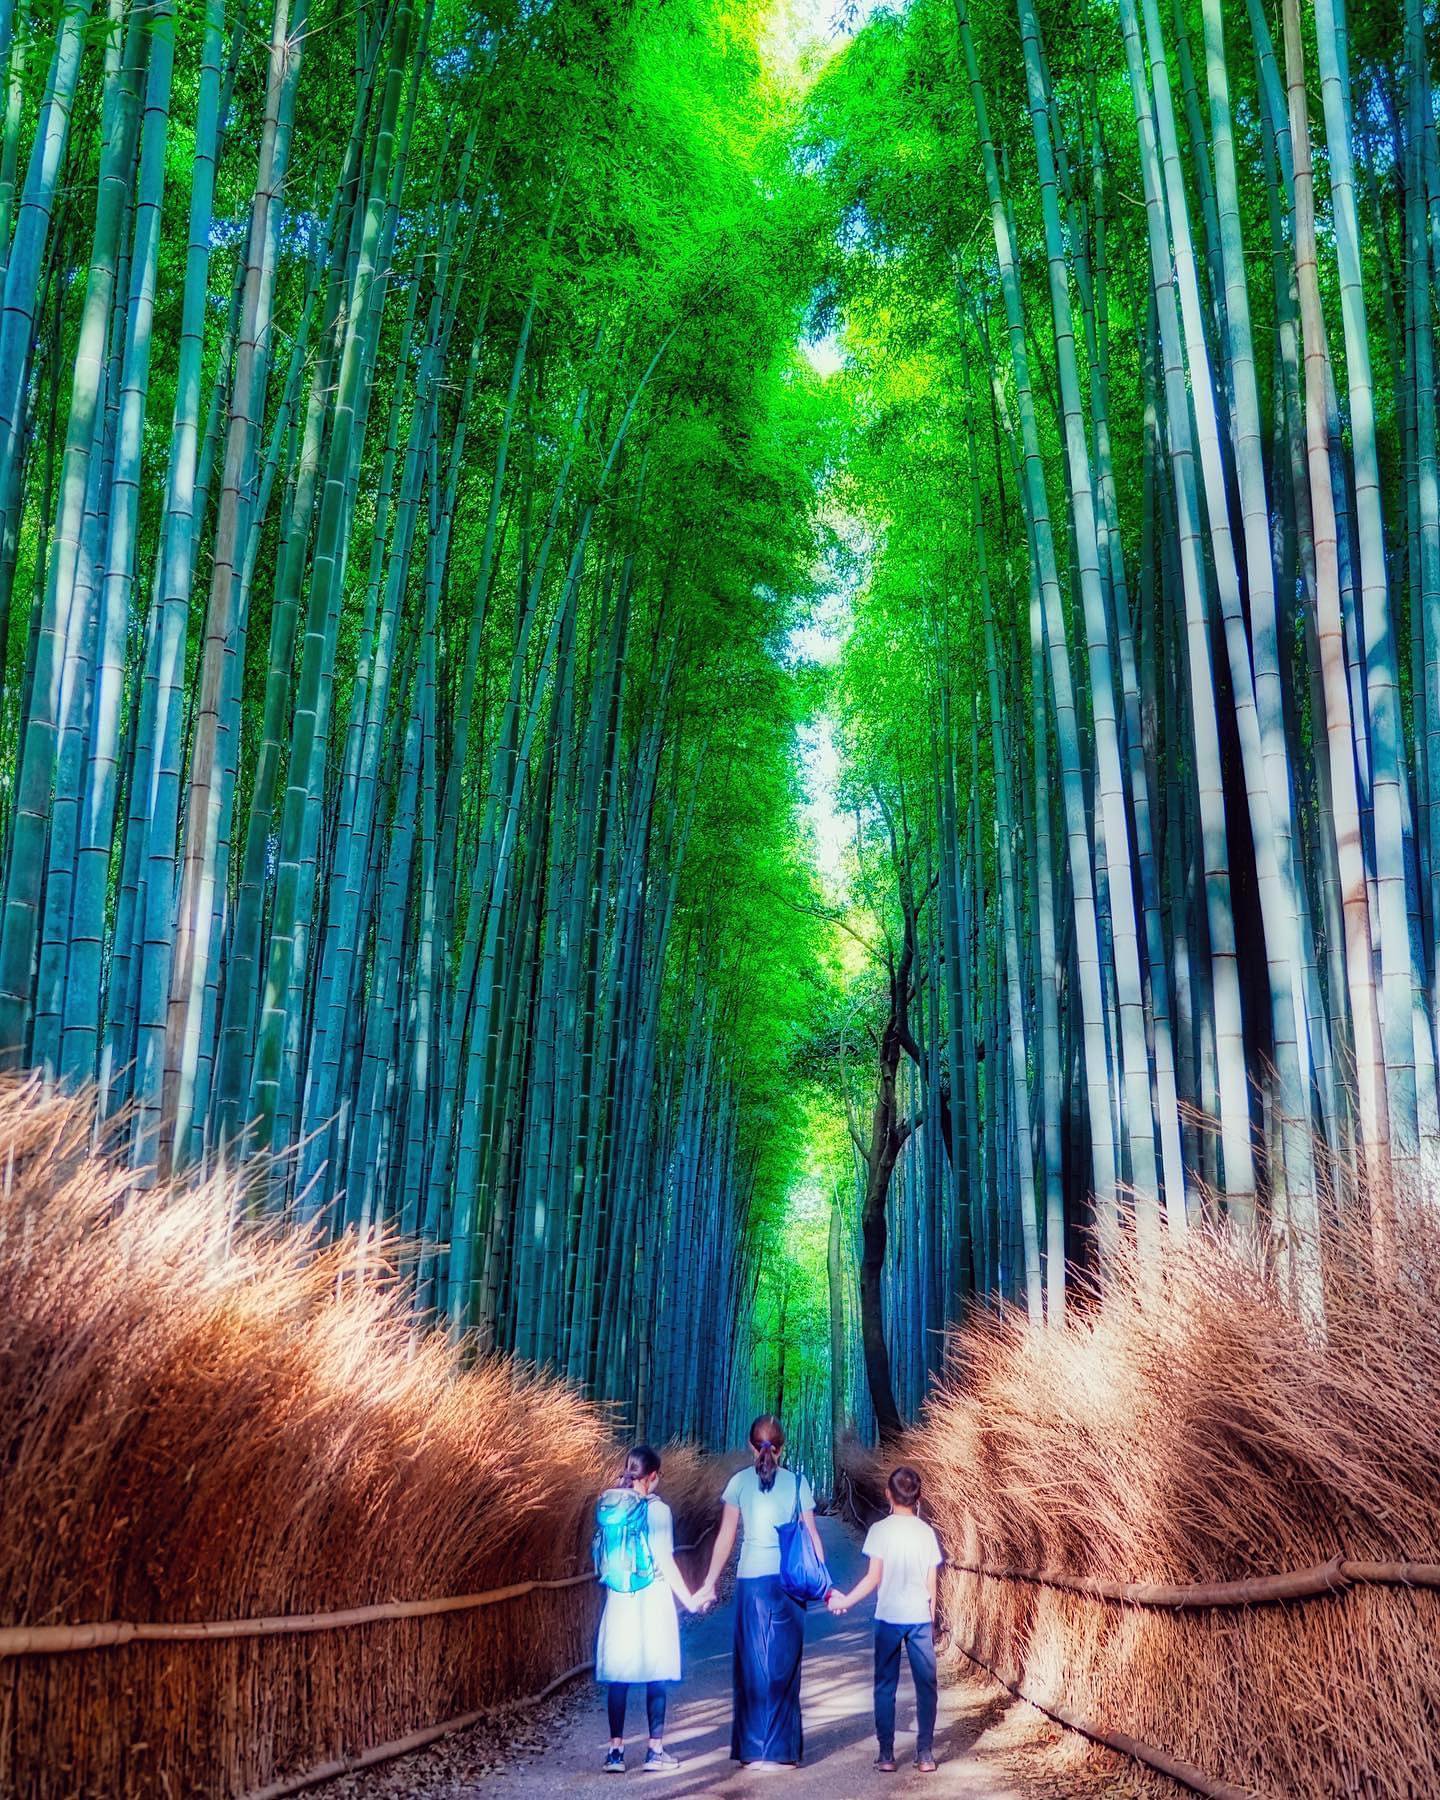 🇯🇵【Kyoto 京都】 嵐山竹林道
🚶走入長約四百公尺的竹林道，在筆直延伸至天空的茂密綠竹中漫步，彷彿造訪另一個靜謐的綠意空間。
❤️竹林道被環境省選定為「令人想保留日本音風景100選」，，許多知名電影影集都在這取景過。第一次造訪京都，相信除了伏見稻荷大社的千本鳥居外，這會是不會錯過的經典場景
👨‍👩‍👧家庭旅遊TIP: 想要感受竹林幽靜的禪意，建議一定要趁早或淡季前往，否則大多時候在這知名的小小道路上只會塞滿人潮與穿梭的人力車。另外一個小技巧是用傳統紅紙傘當拍照道具，巧妙借位可遮住後方人潮。

#japan #kyoto #日本京都 #京都竹林 #嵐山竹林 #把世界當教室🌍 #travelwitmikeanna #牽手照系列👫